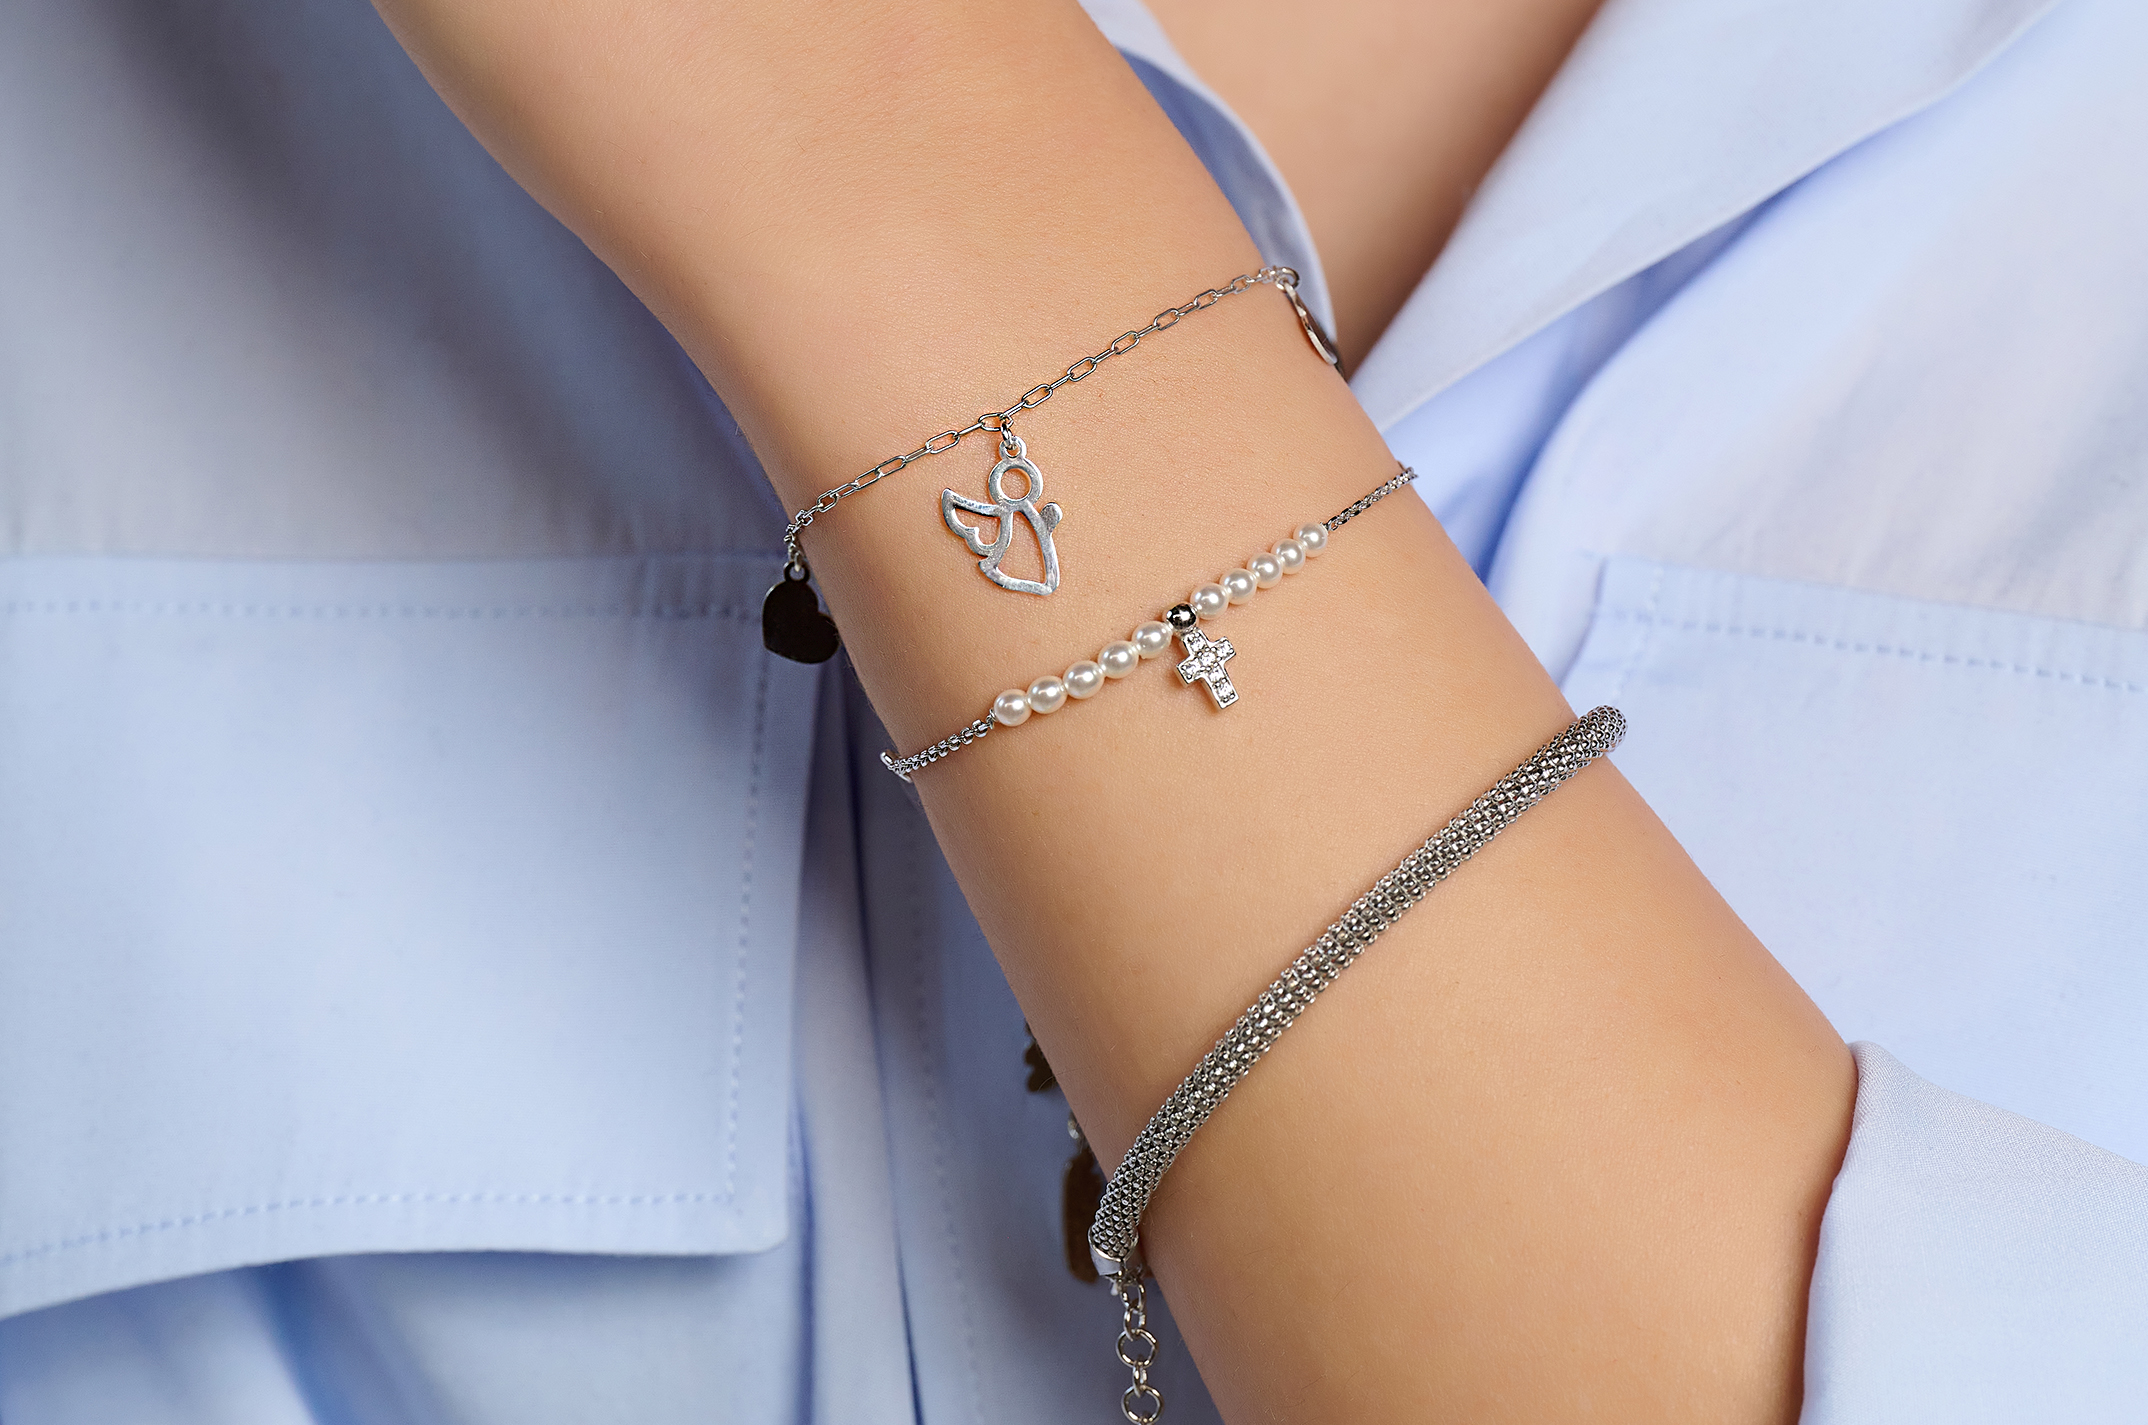 Jewel: bracelet;Material: silver 925;Weight: 1.7 gr;Color: white;Size: 16 cm + 3.5 cm; Pendent size:
1.2 cm